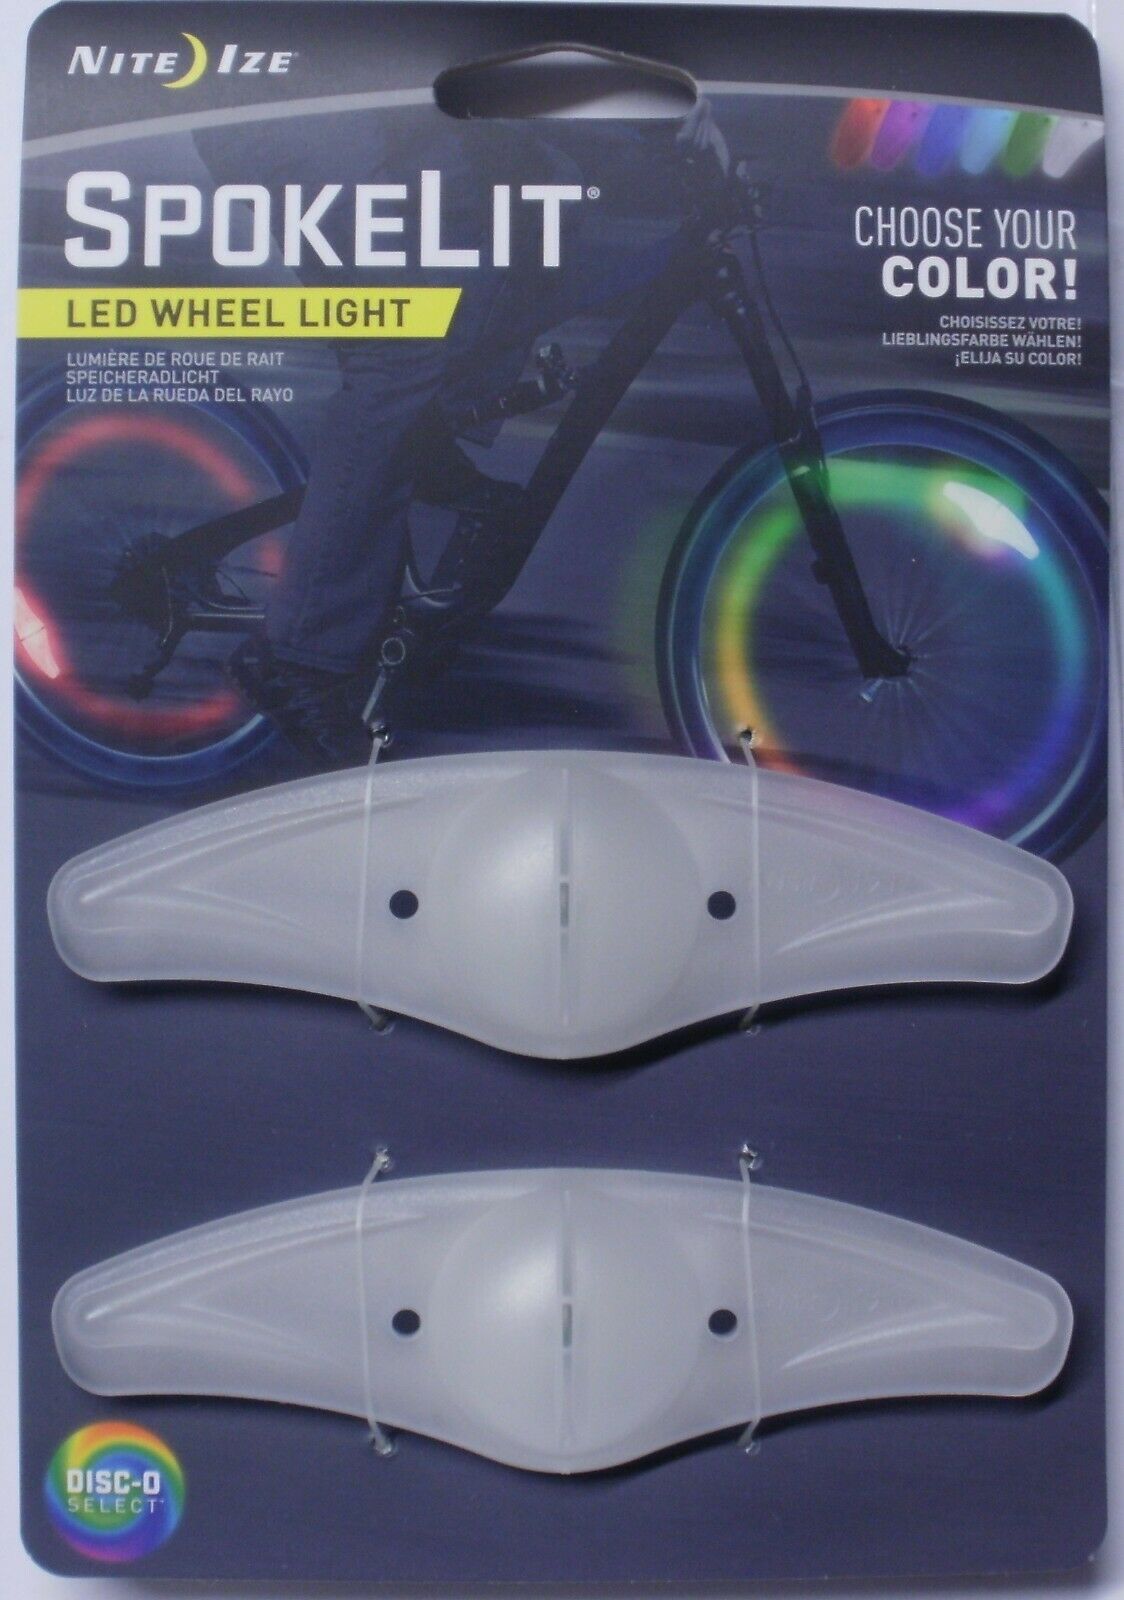 SpokeLit LED Spoke Lights